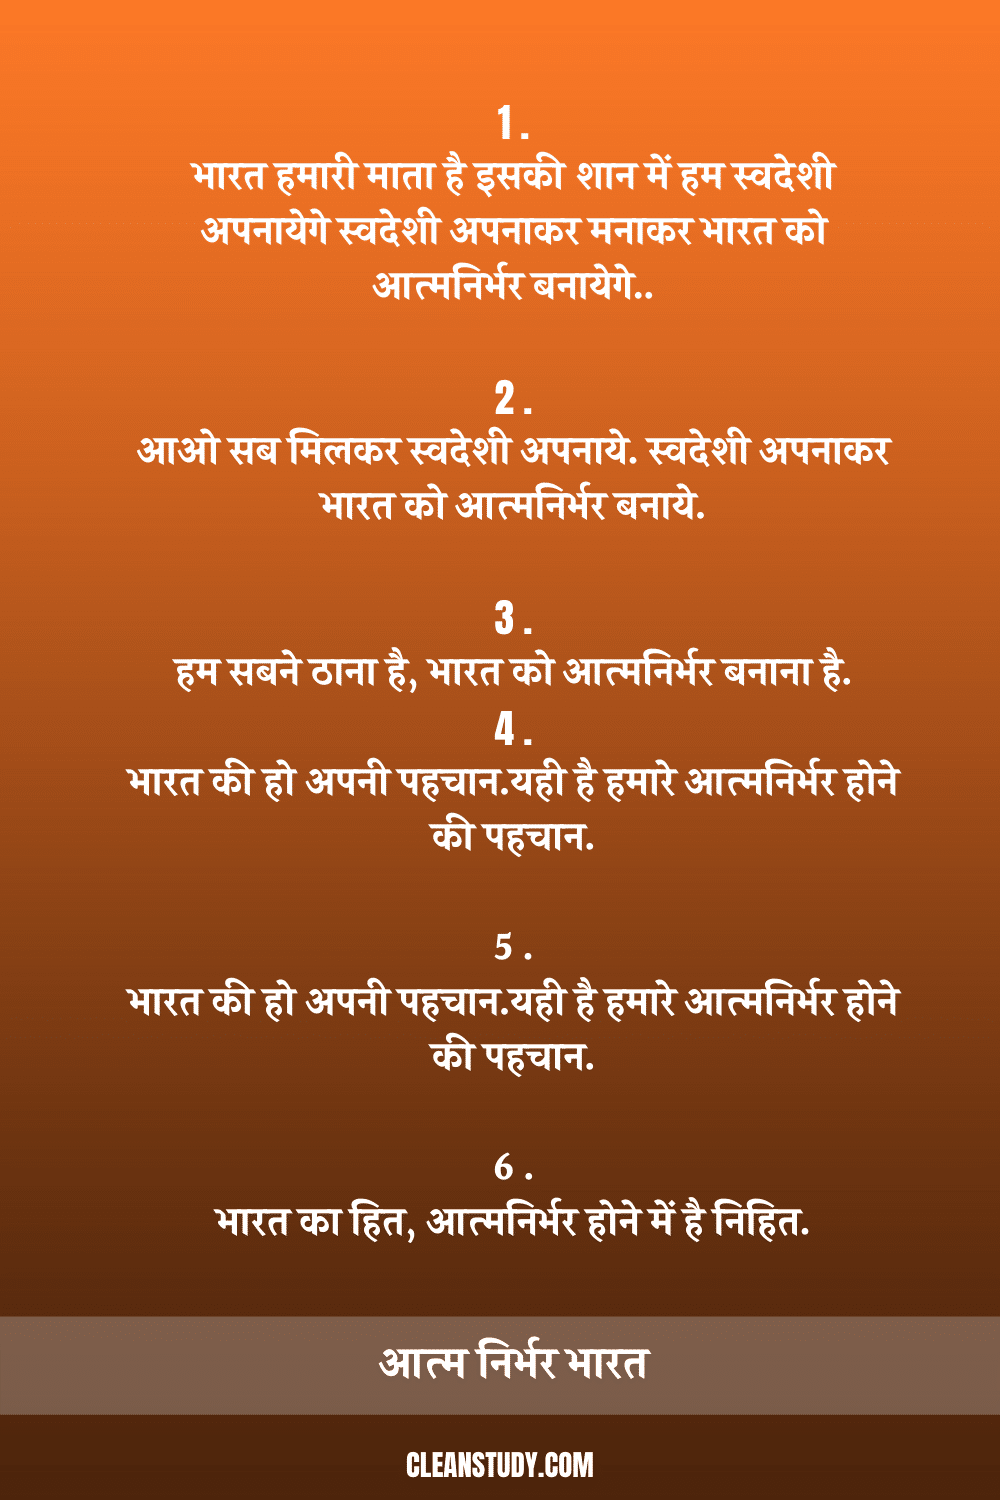 aatm nirbhar bharat slogan in hindi